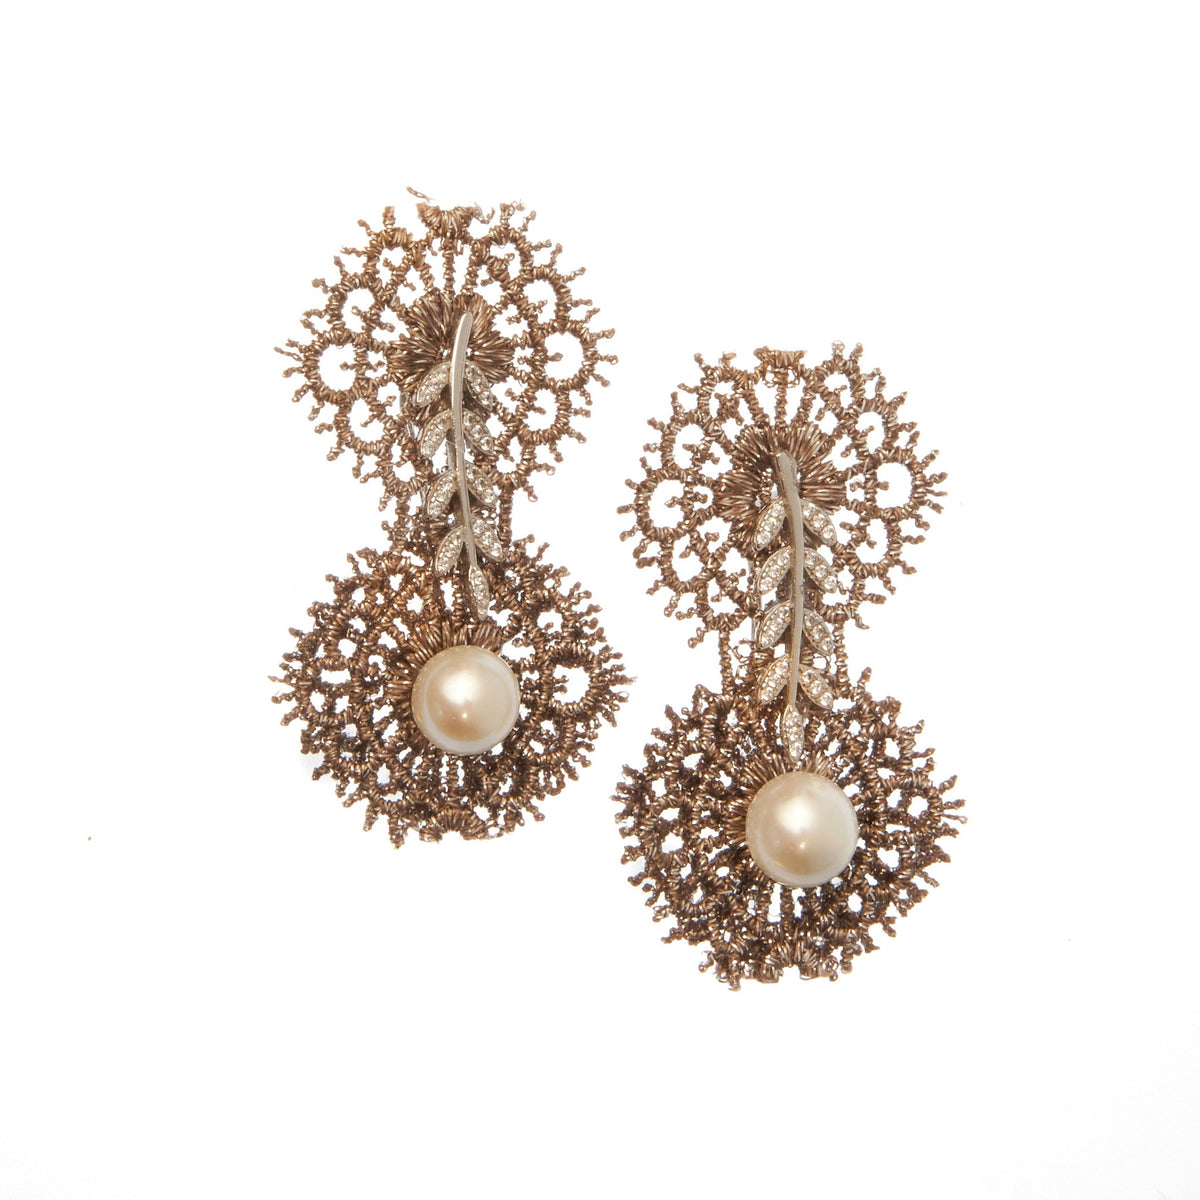 Kim Smiley - Tagore Earrings Bronze/White